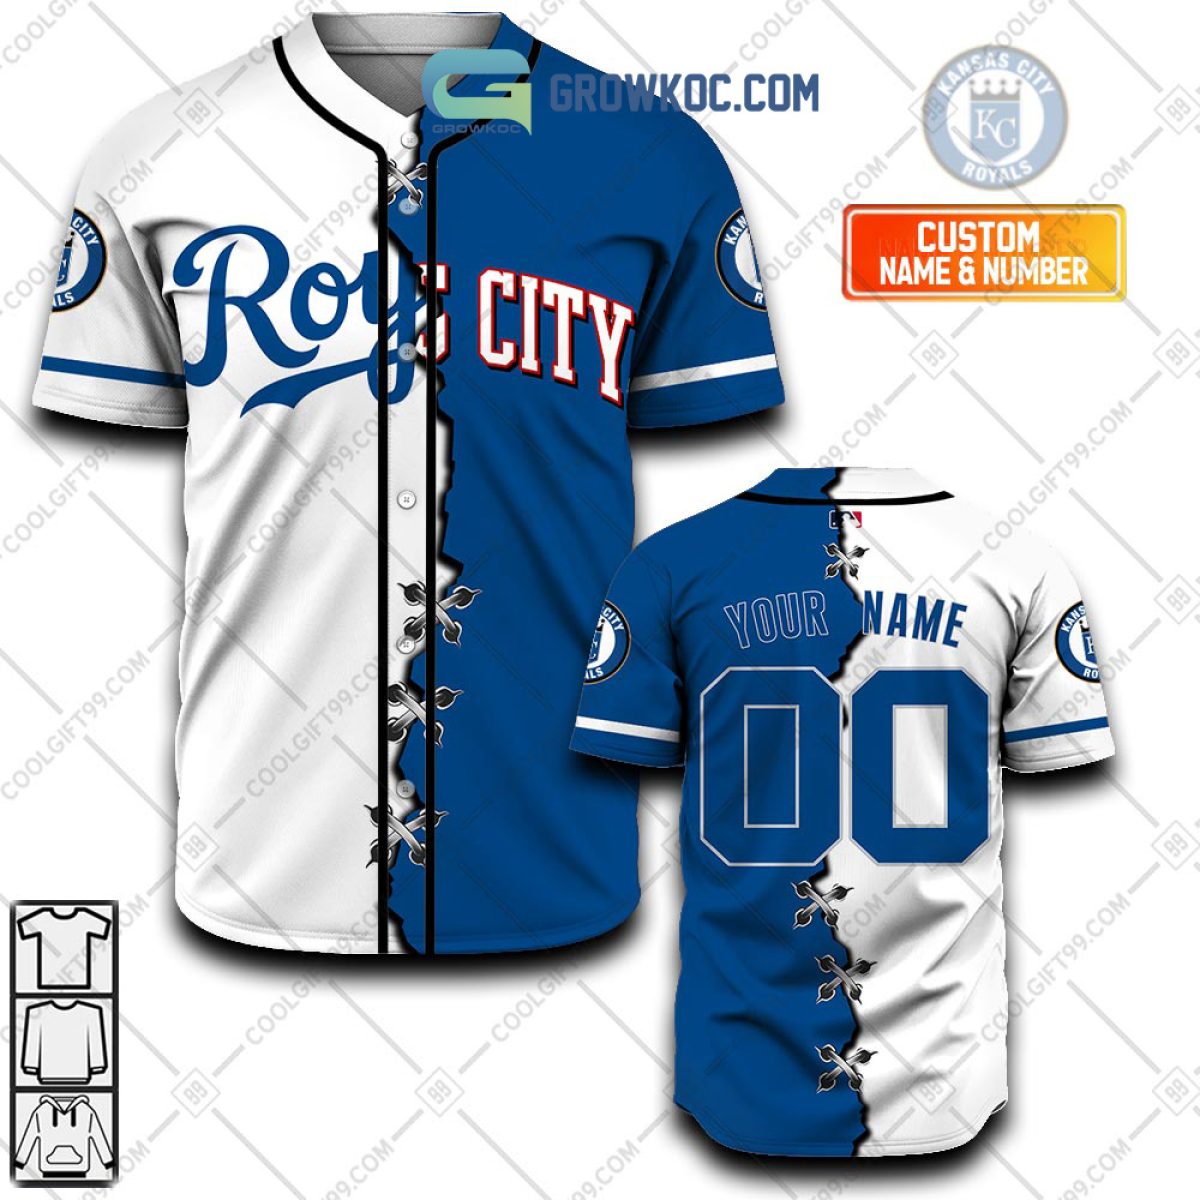 Kansas City Royals MLB Baseball Jersey Shirt Custom Name And Number For Fans